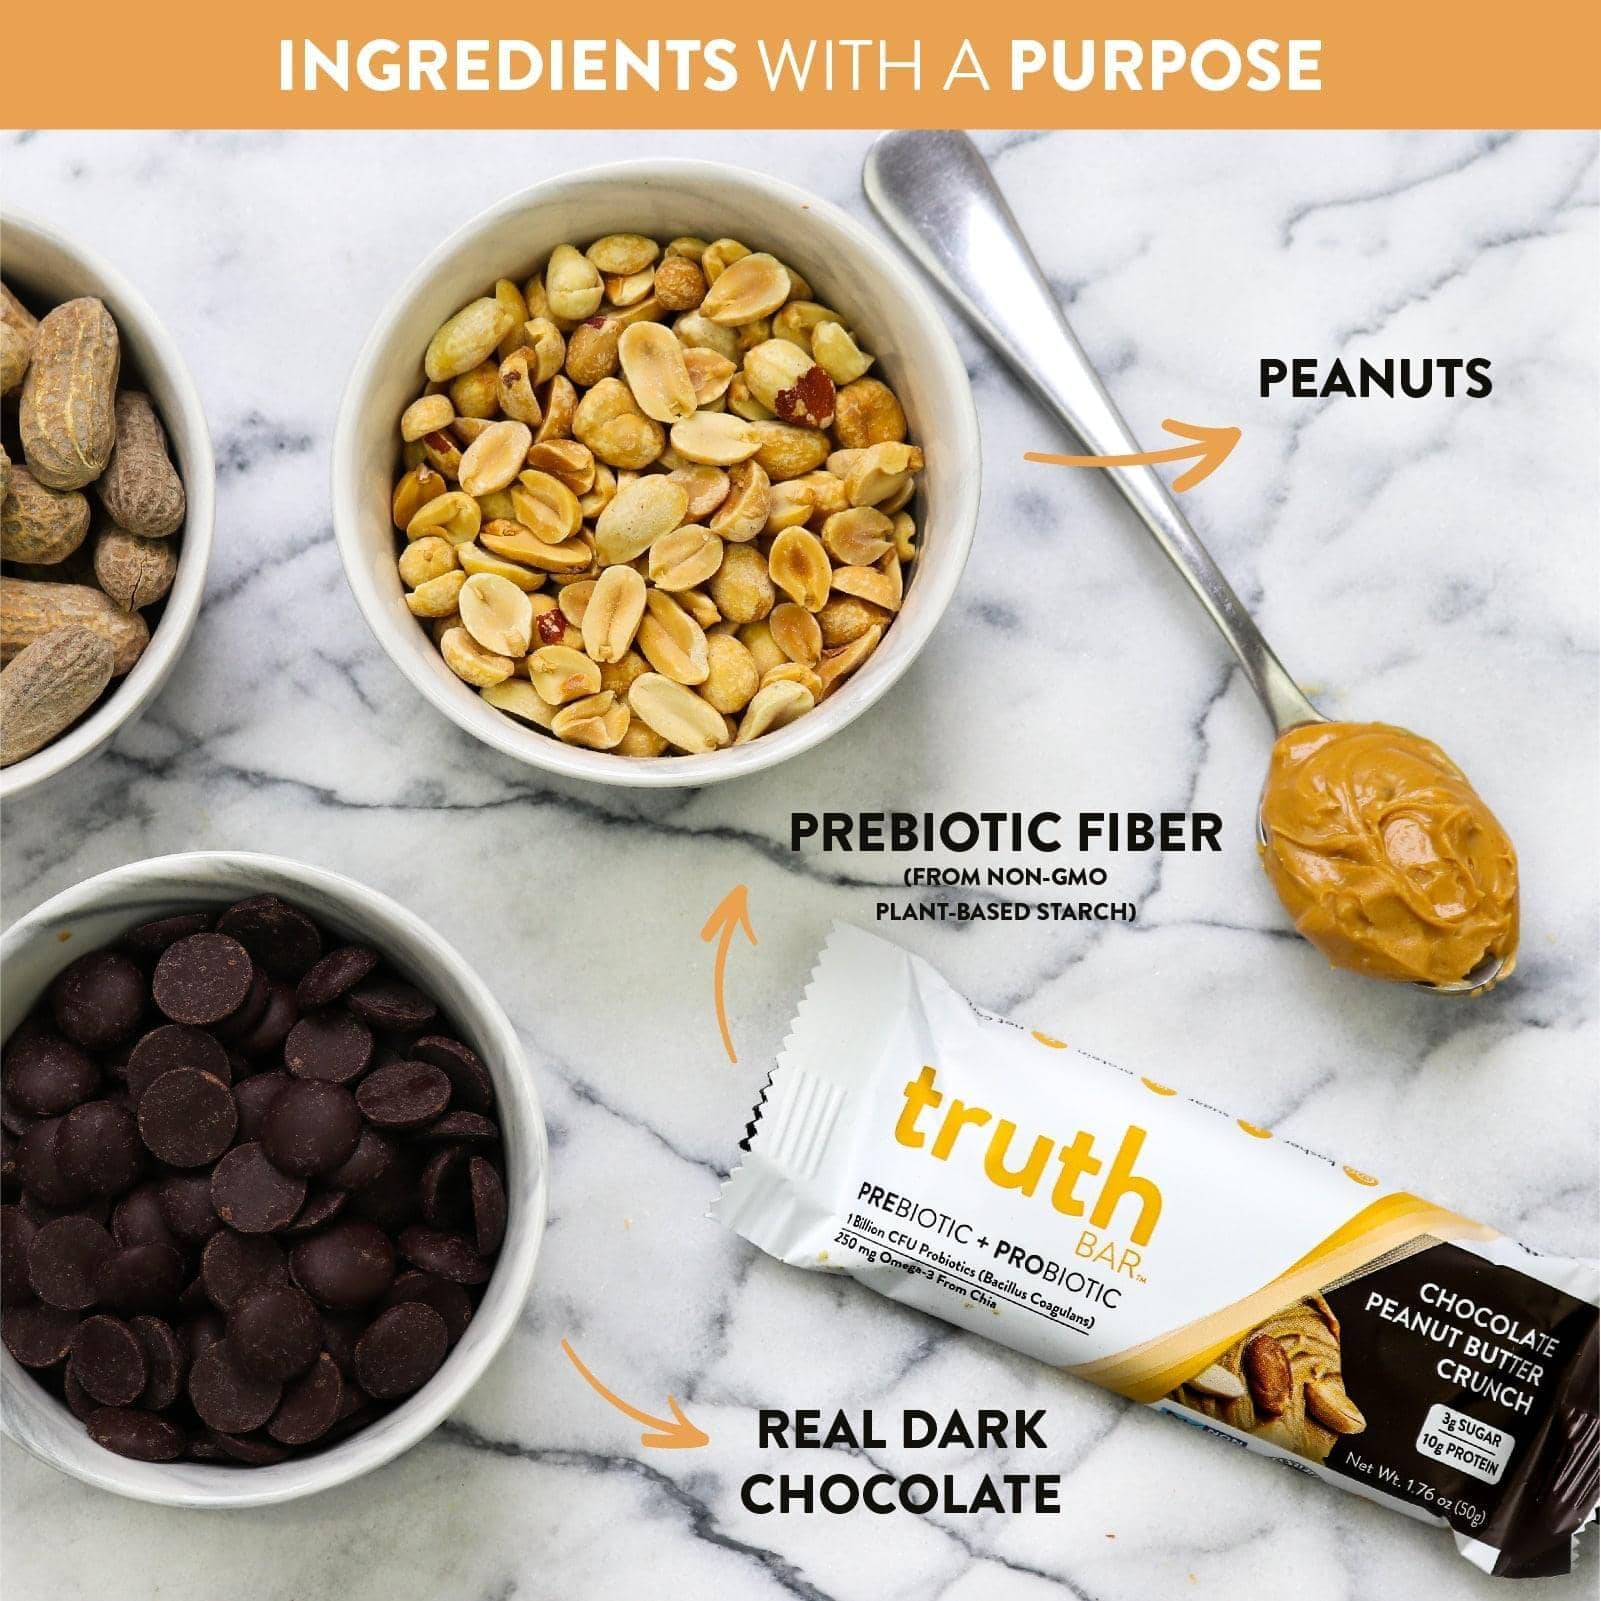 Berg Bar Peanut Butter Dark Chocolate - Plant Protein Crunch - Box